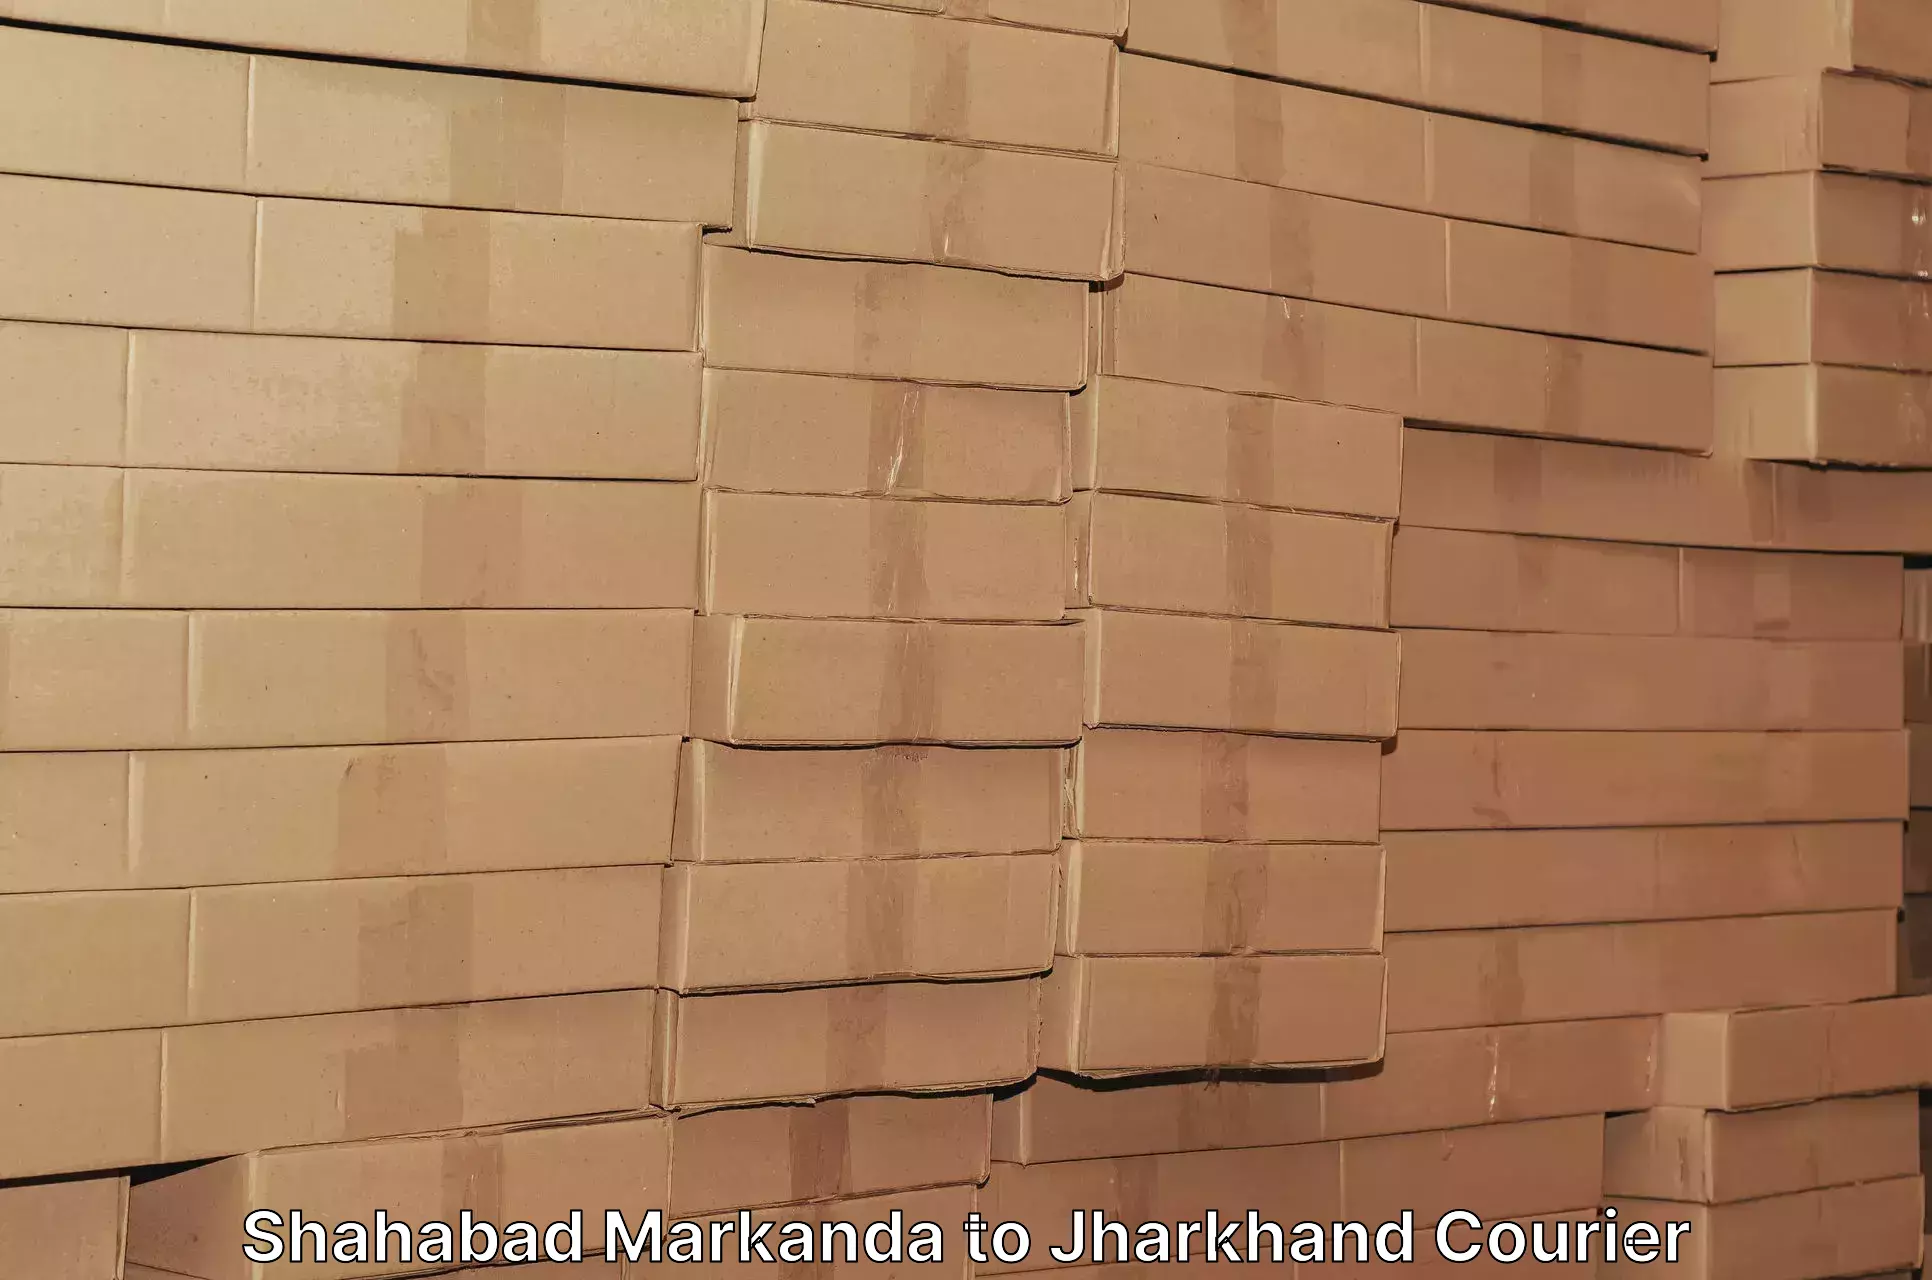 Efficient order fulfillment Shahabad Markanda to Balumath